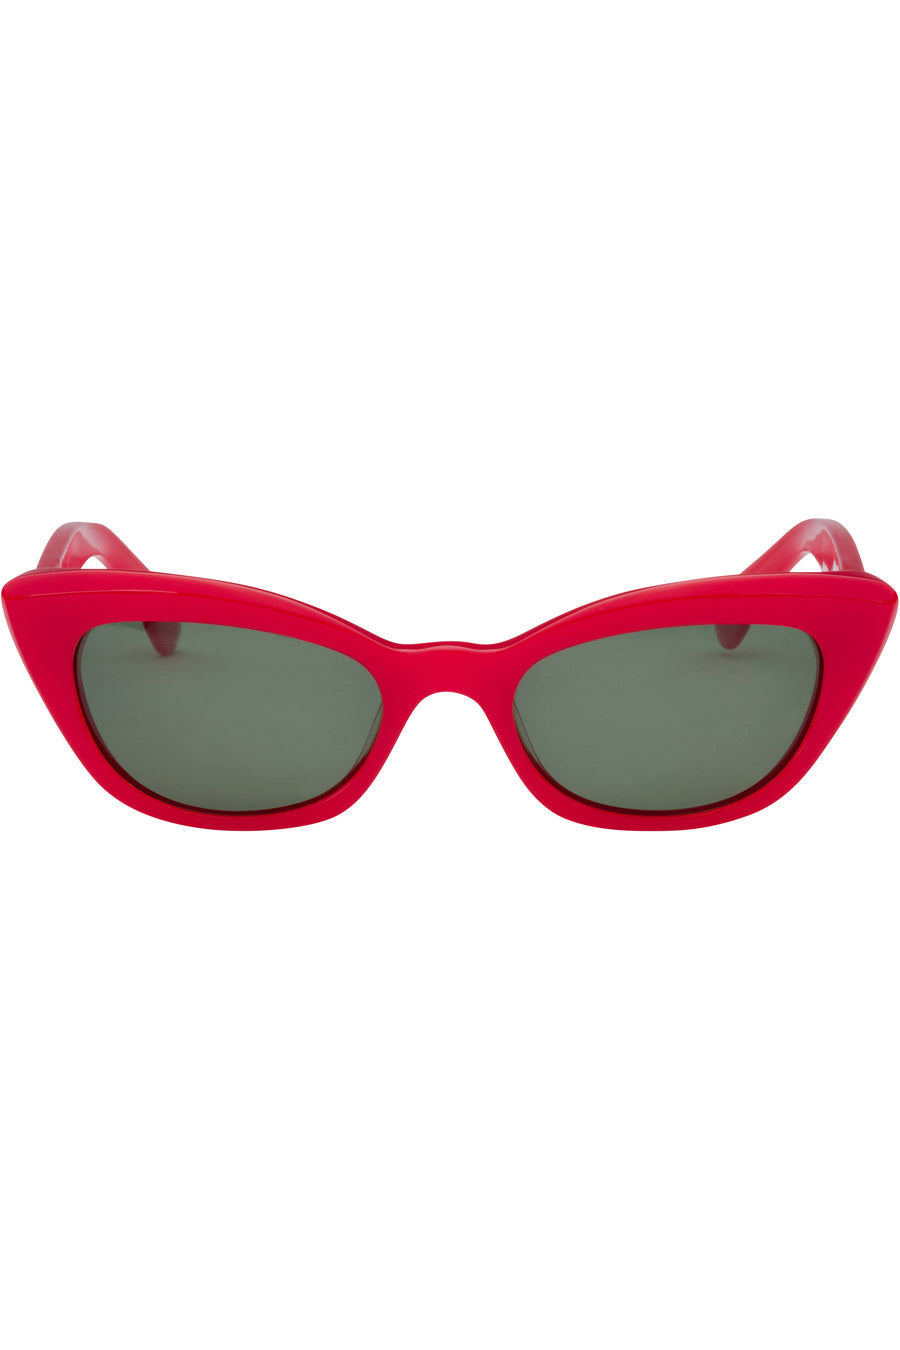 Cat eye Teeth Sunglasses Red